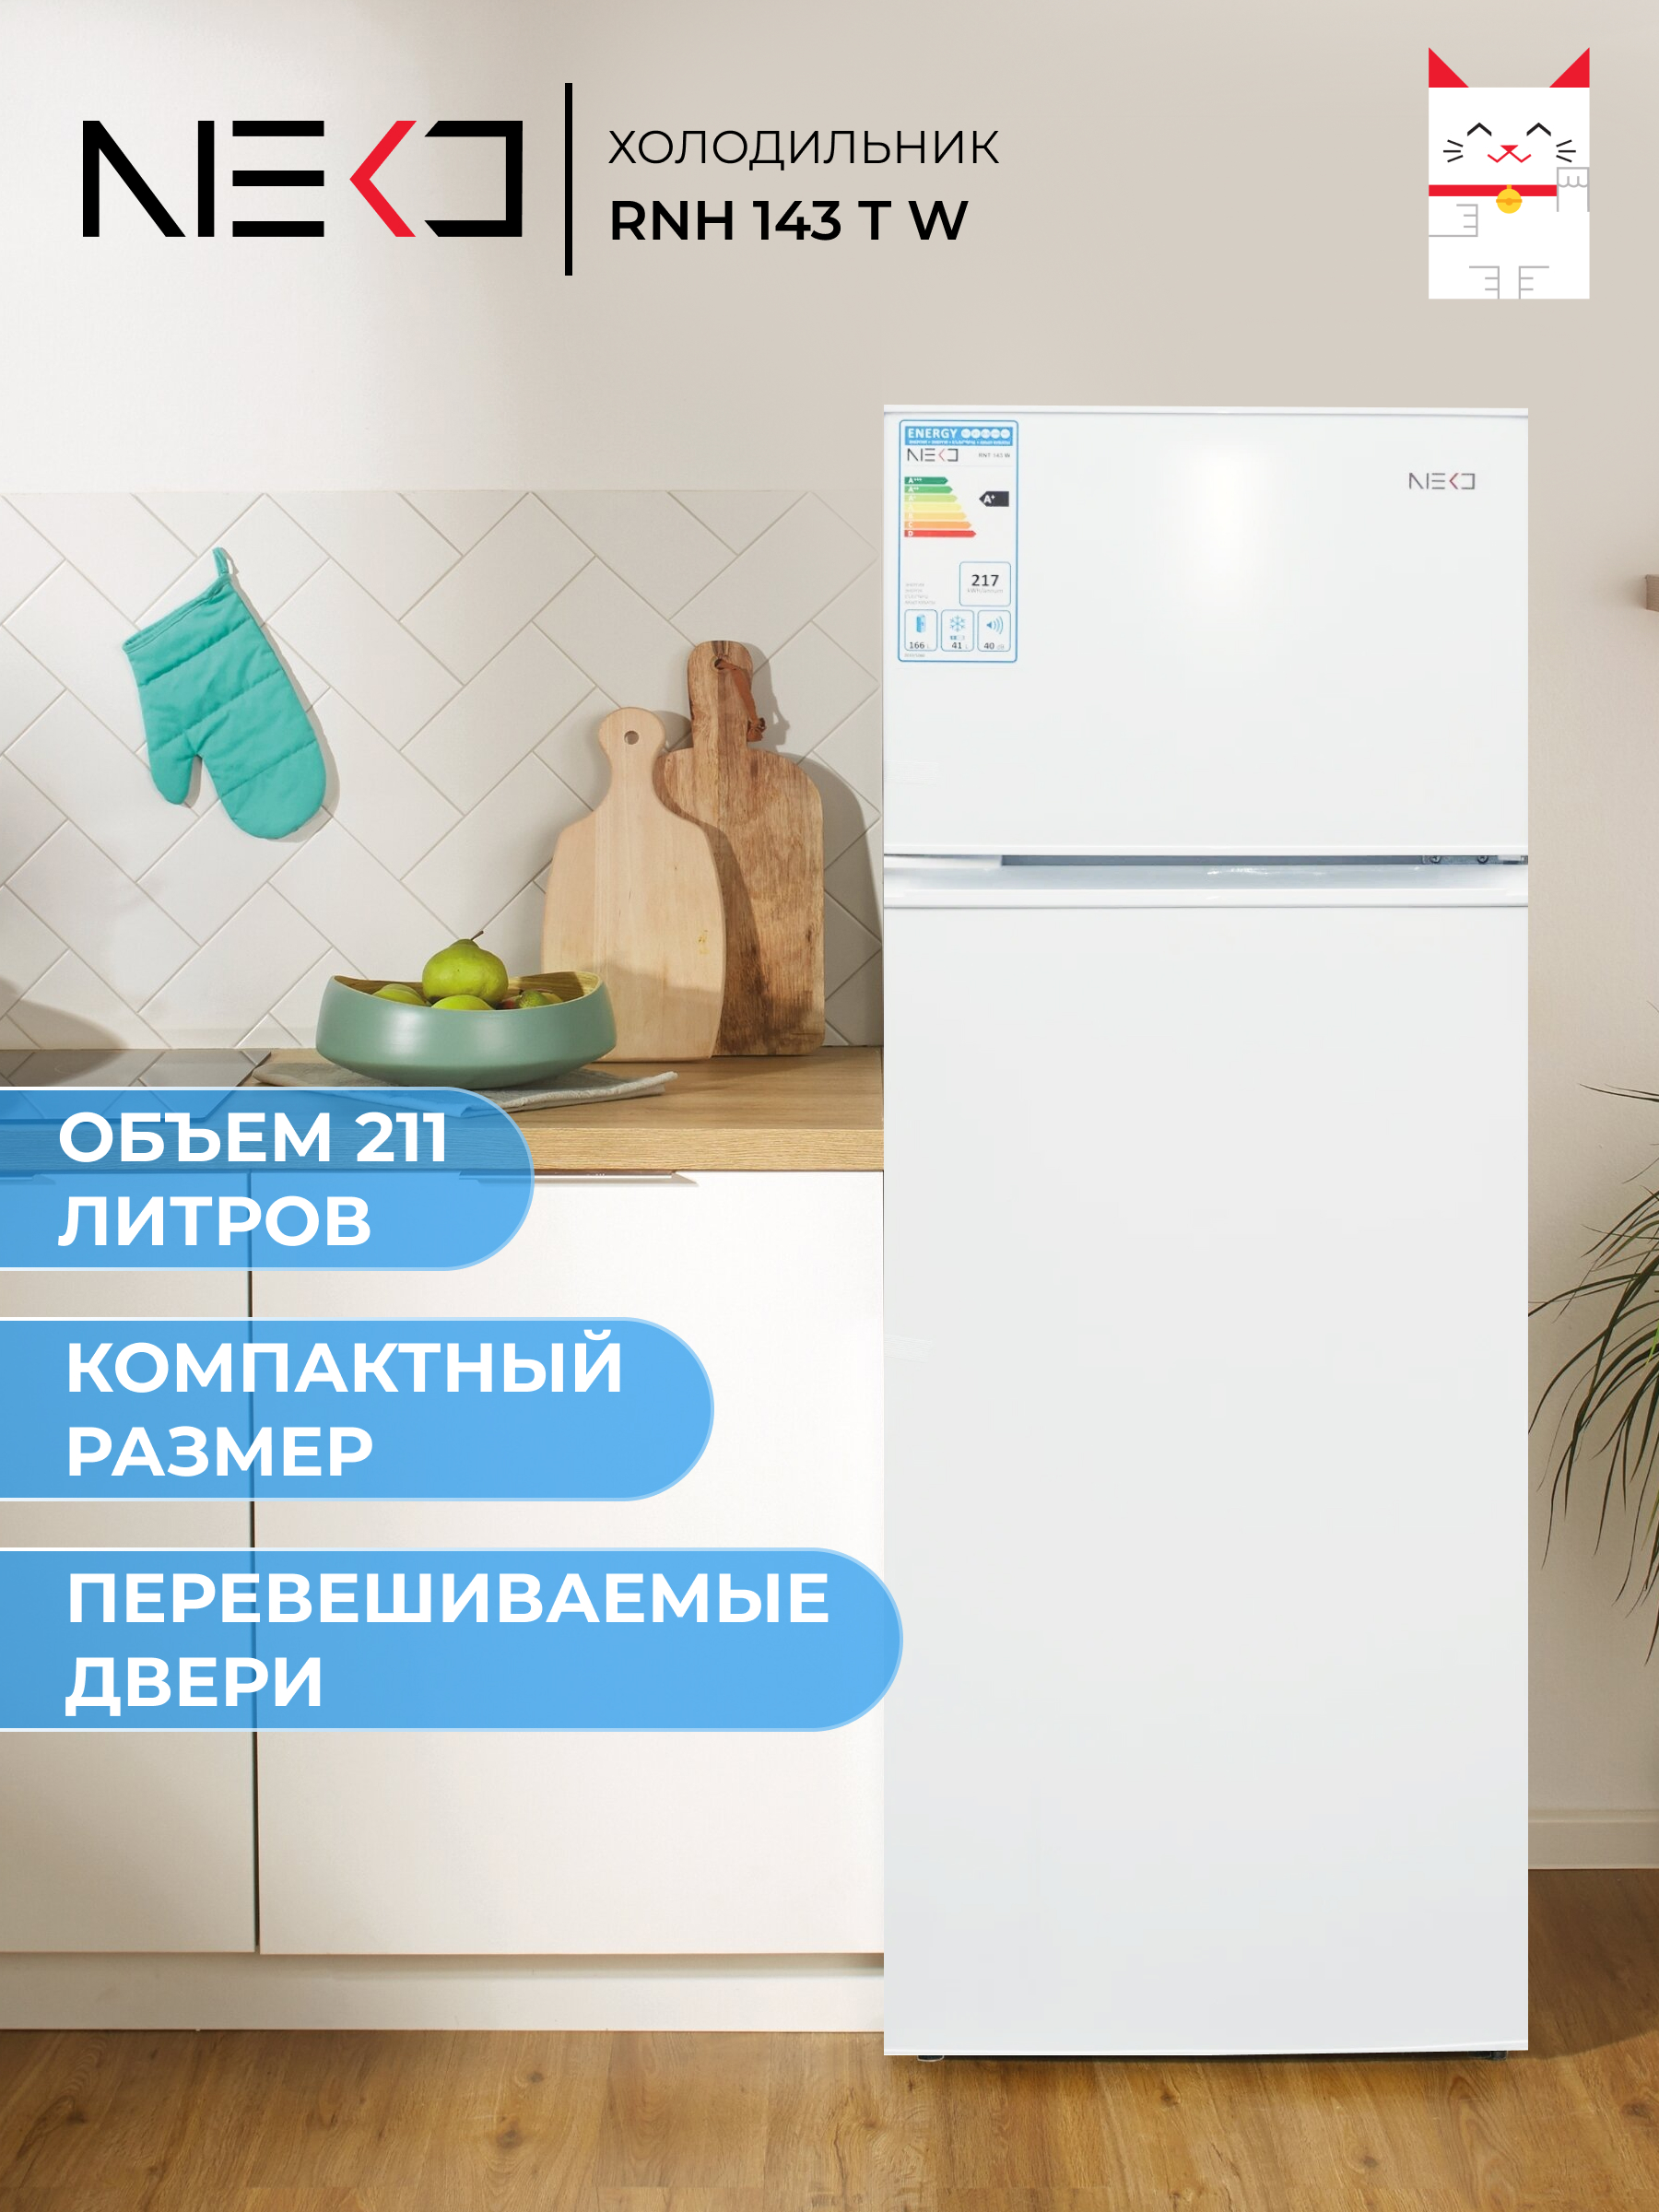 Холодильник Neko RNH 143 T W белый холодильник gorenje rk 6191 ew4 двухкамерный класс а 320 л белый